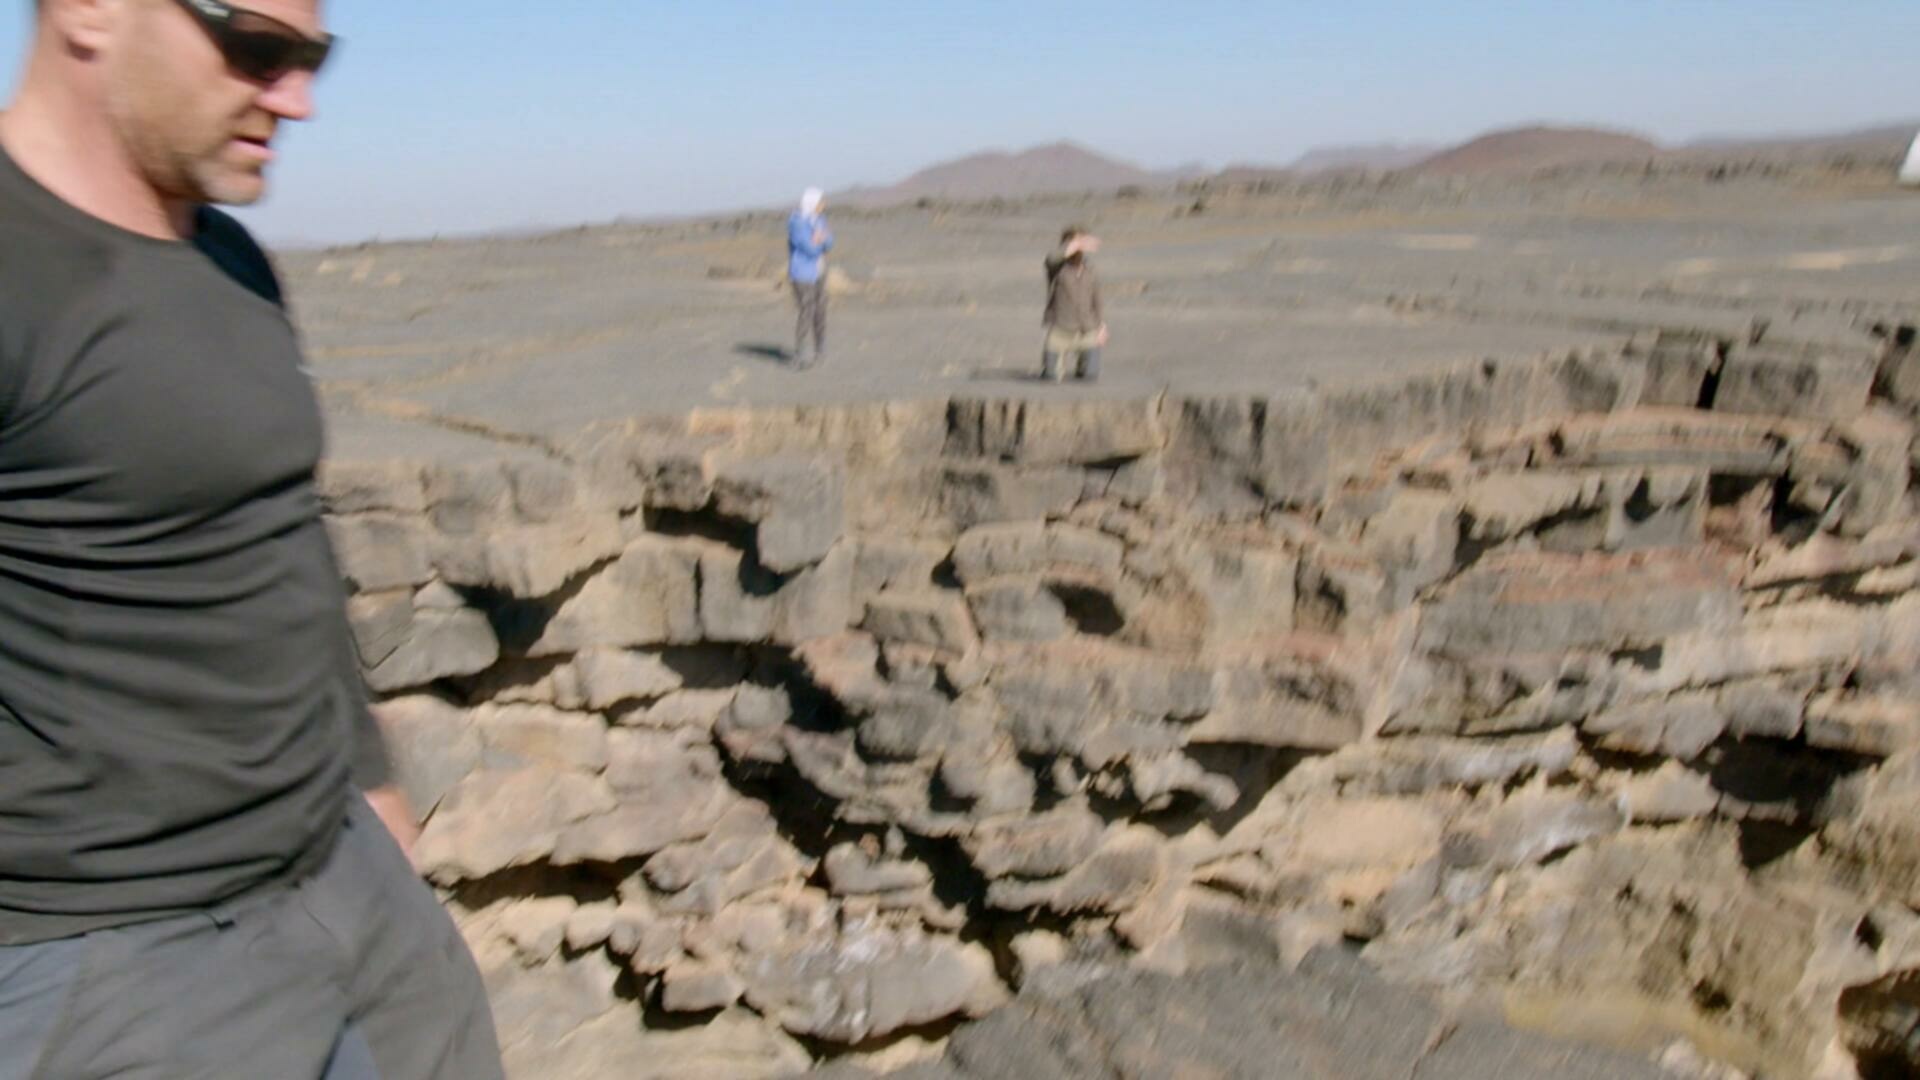 Expedition with Steve Backshall S02E02 Saudi Arabia Expedition Volcanic Underworld 1080p AMZN WEB DL